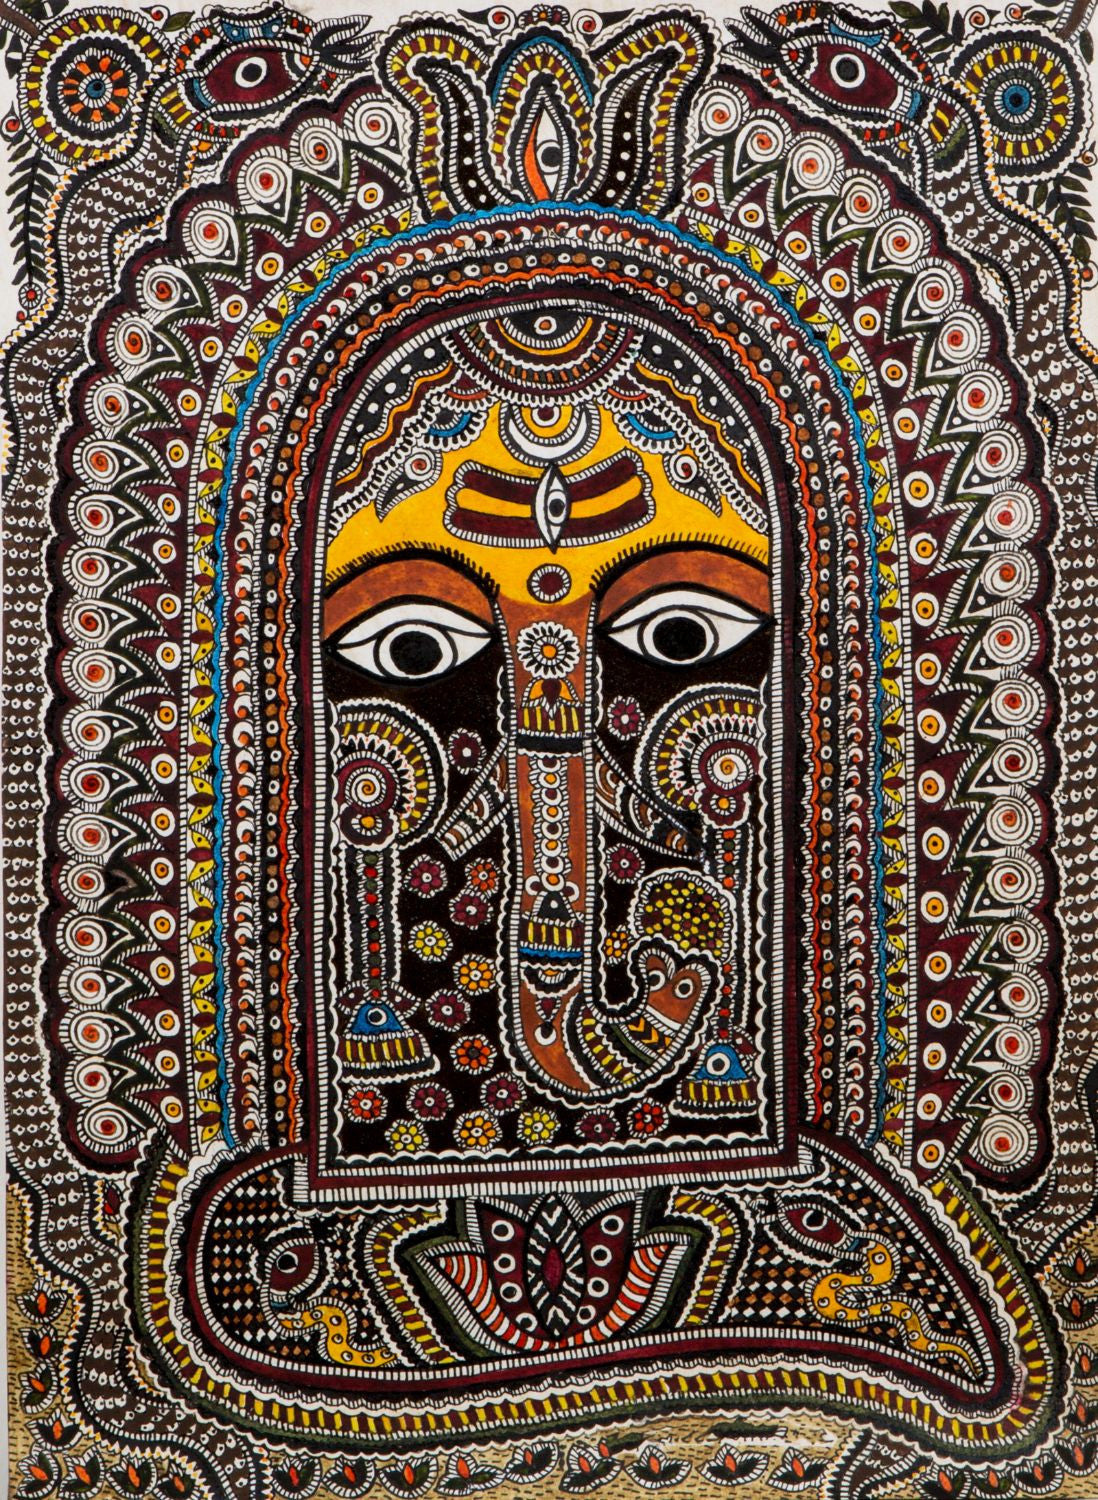 Mithila Art - Ganesha - Life Size Posters by Sina Irani | Buy ...